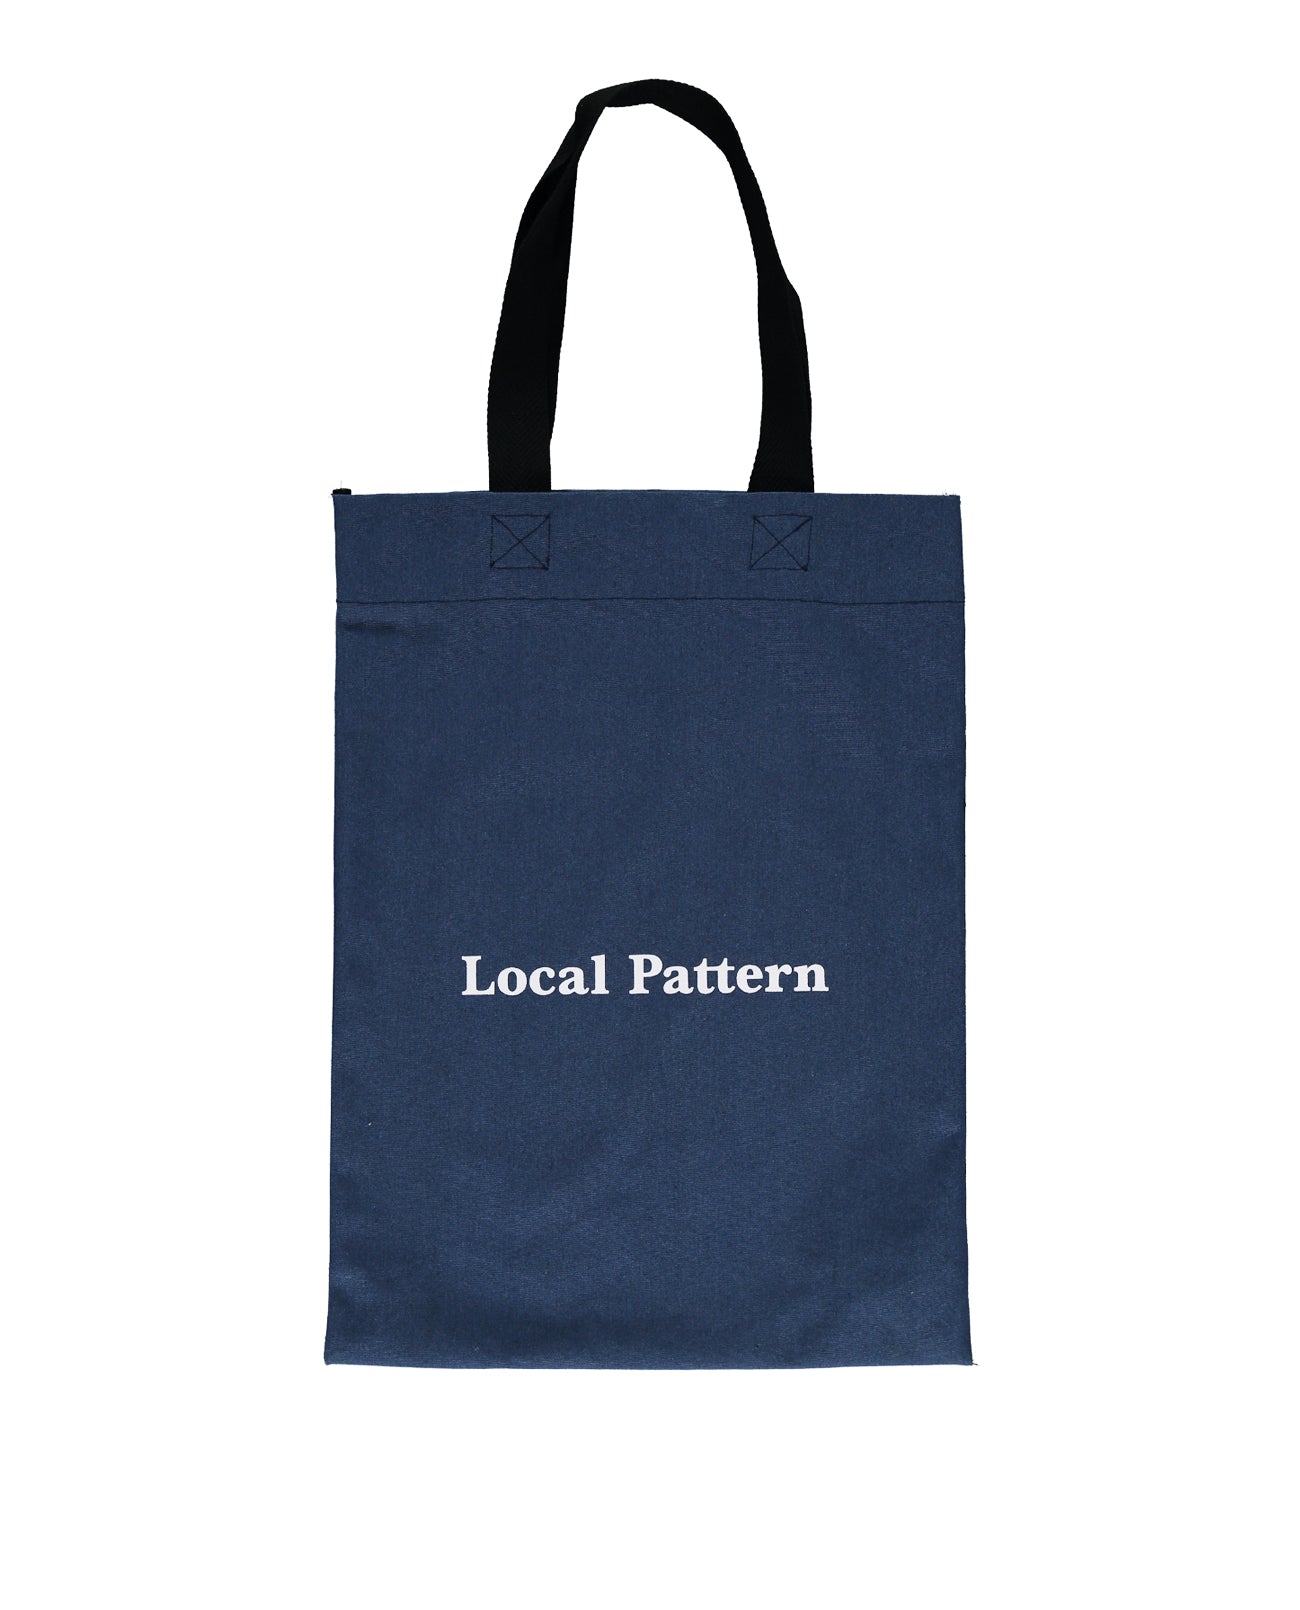 A2 Bag Logo - Local Pattern